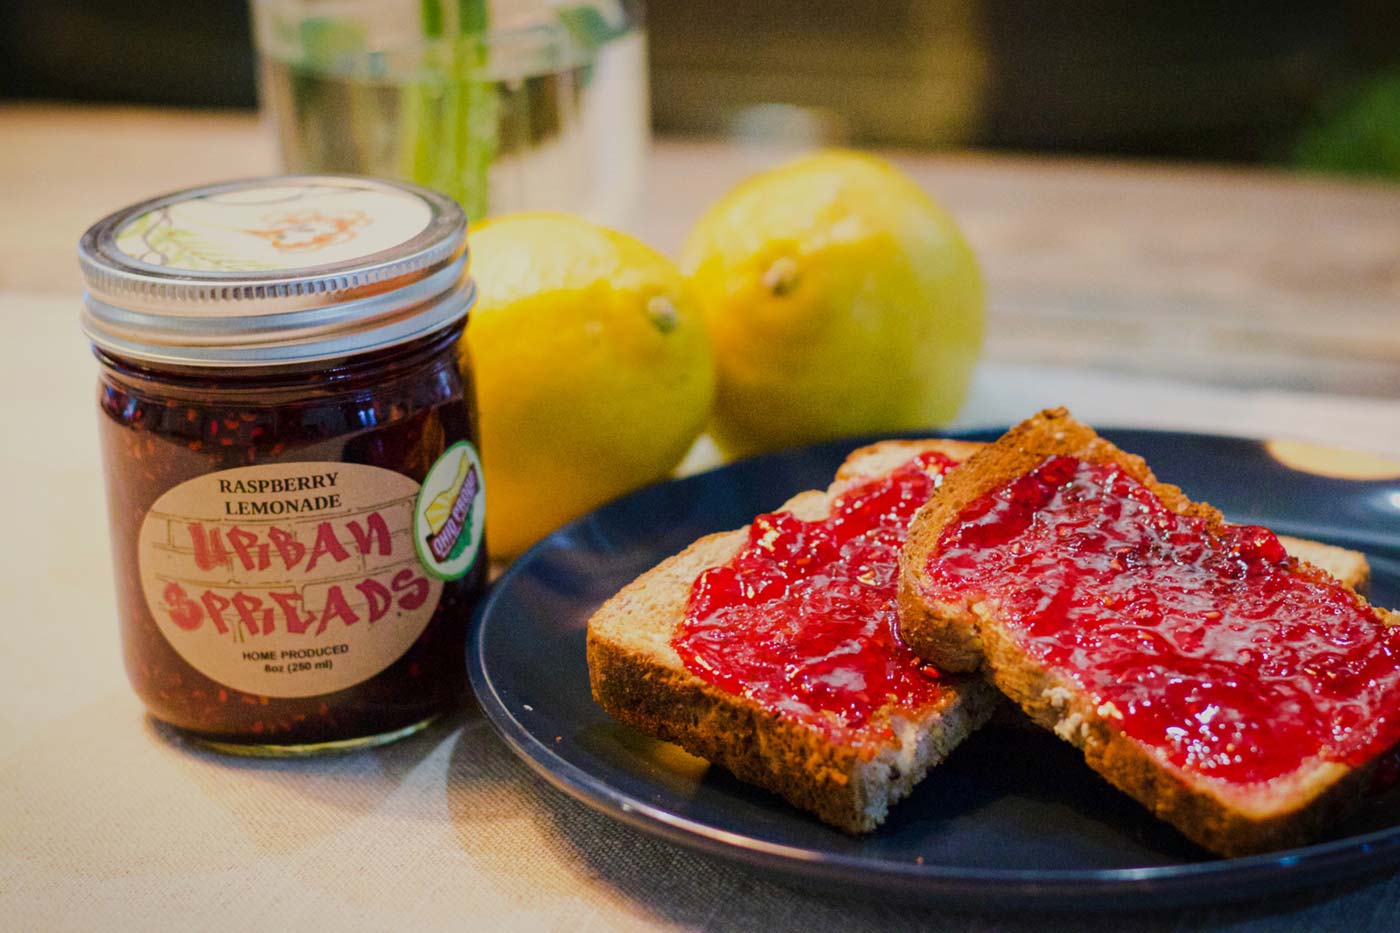 Toast with Raspberry Lemonade jam